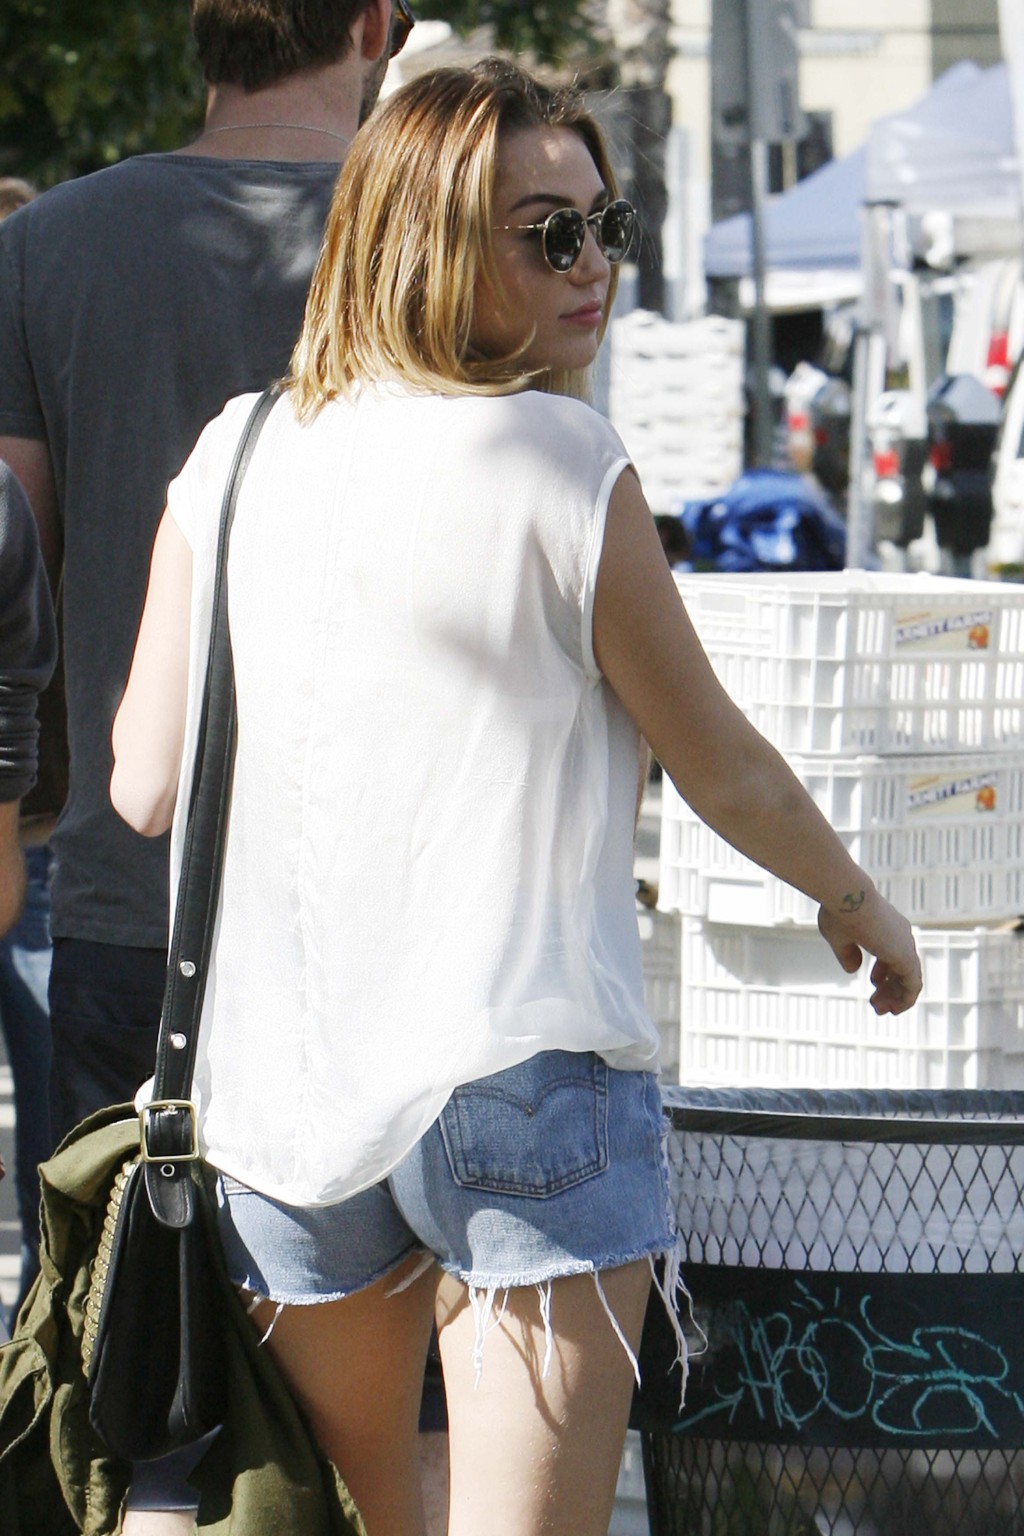 Miley Cyrus bra peak while shopping at the farmer's market in LA #75274006